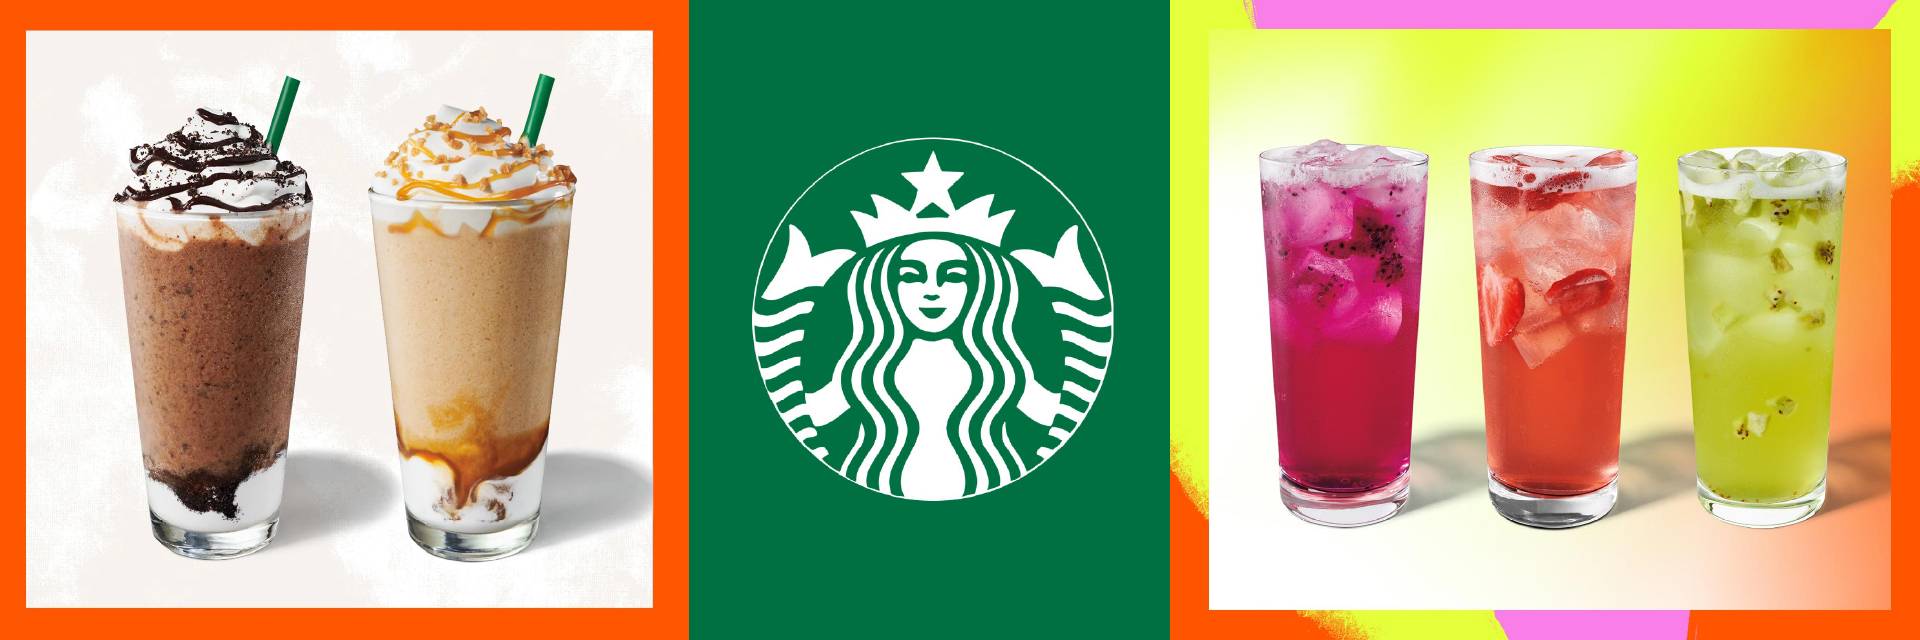 starbucks coffee and lemonade drinks and the starbucks logo